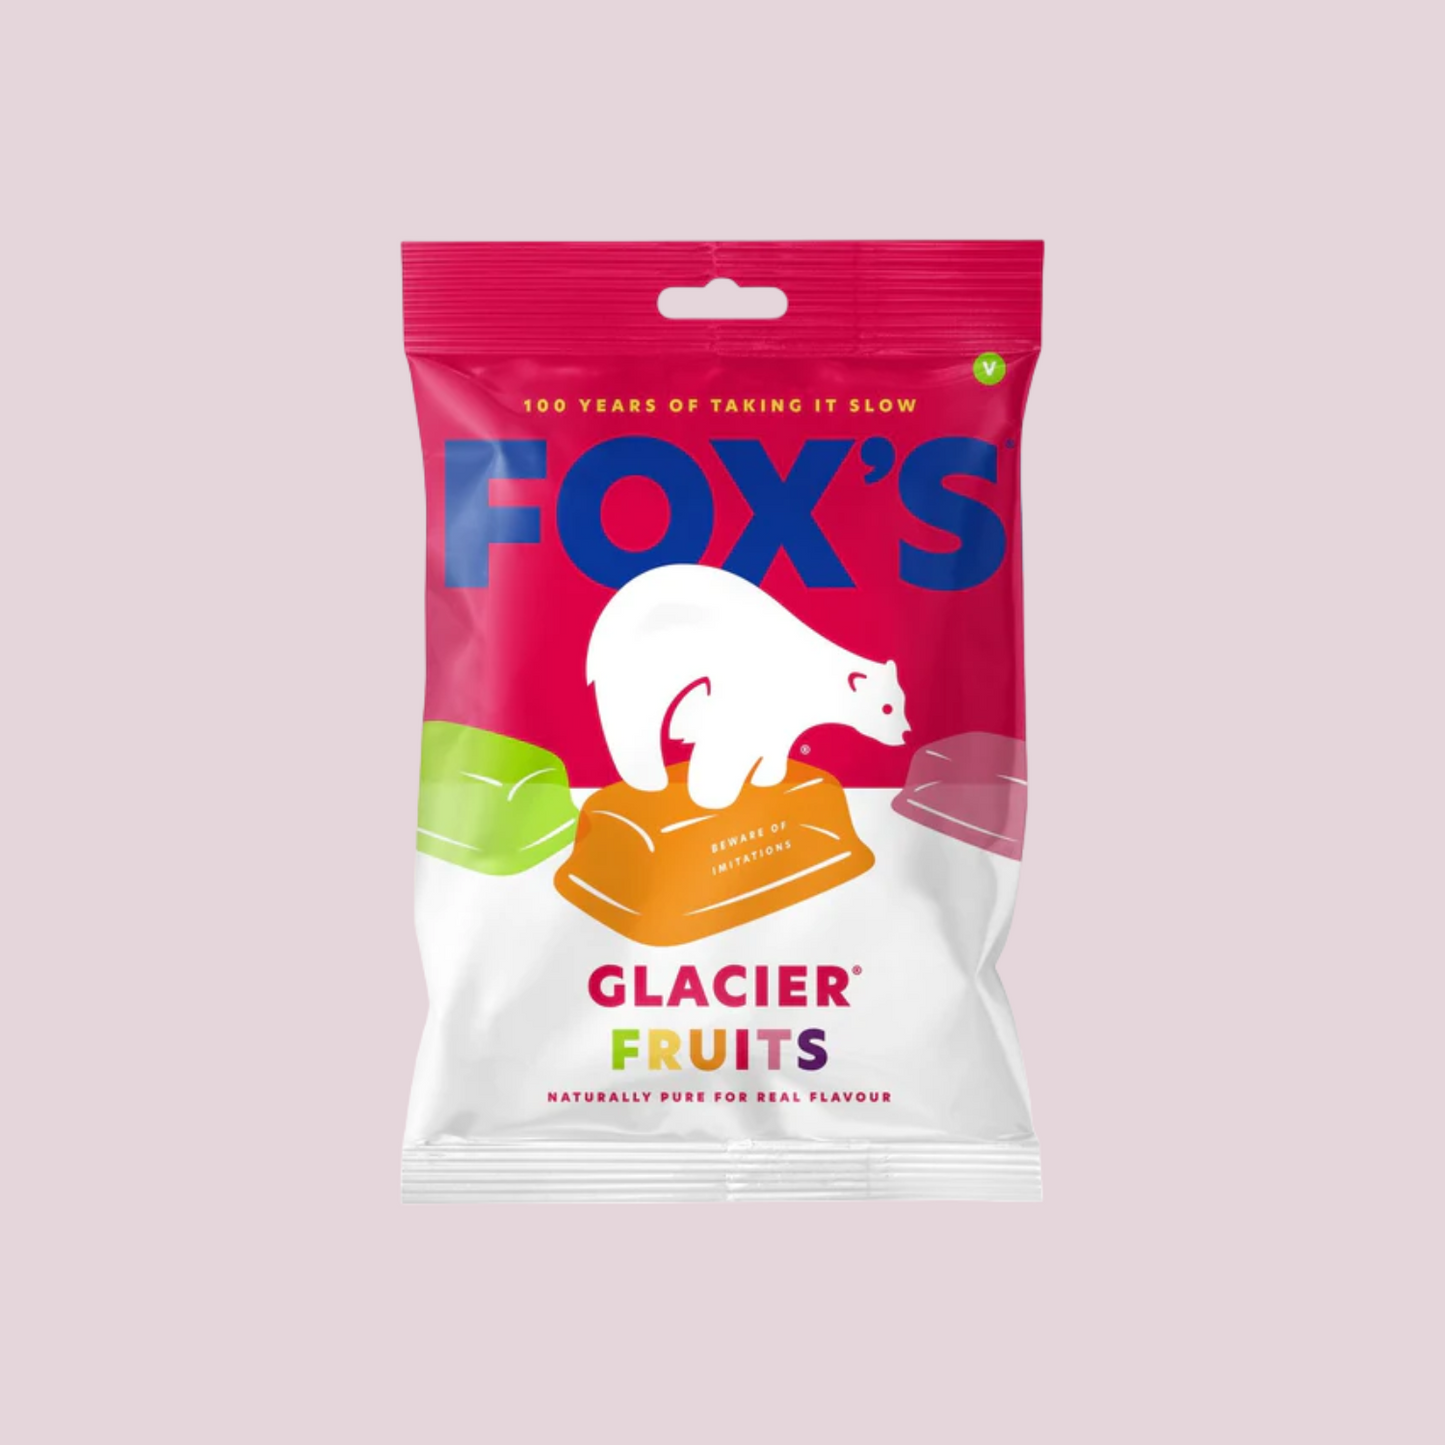 Fox's Glacier Fruits 100g